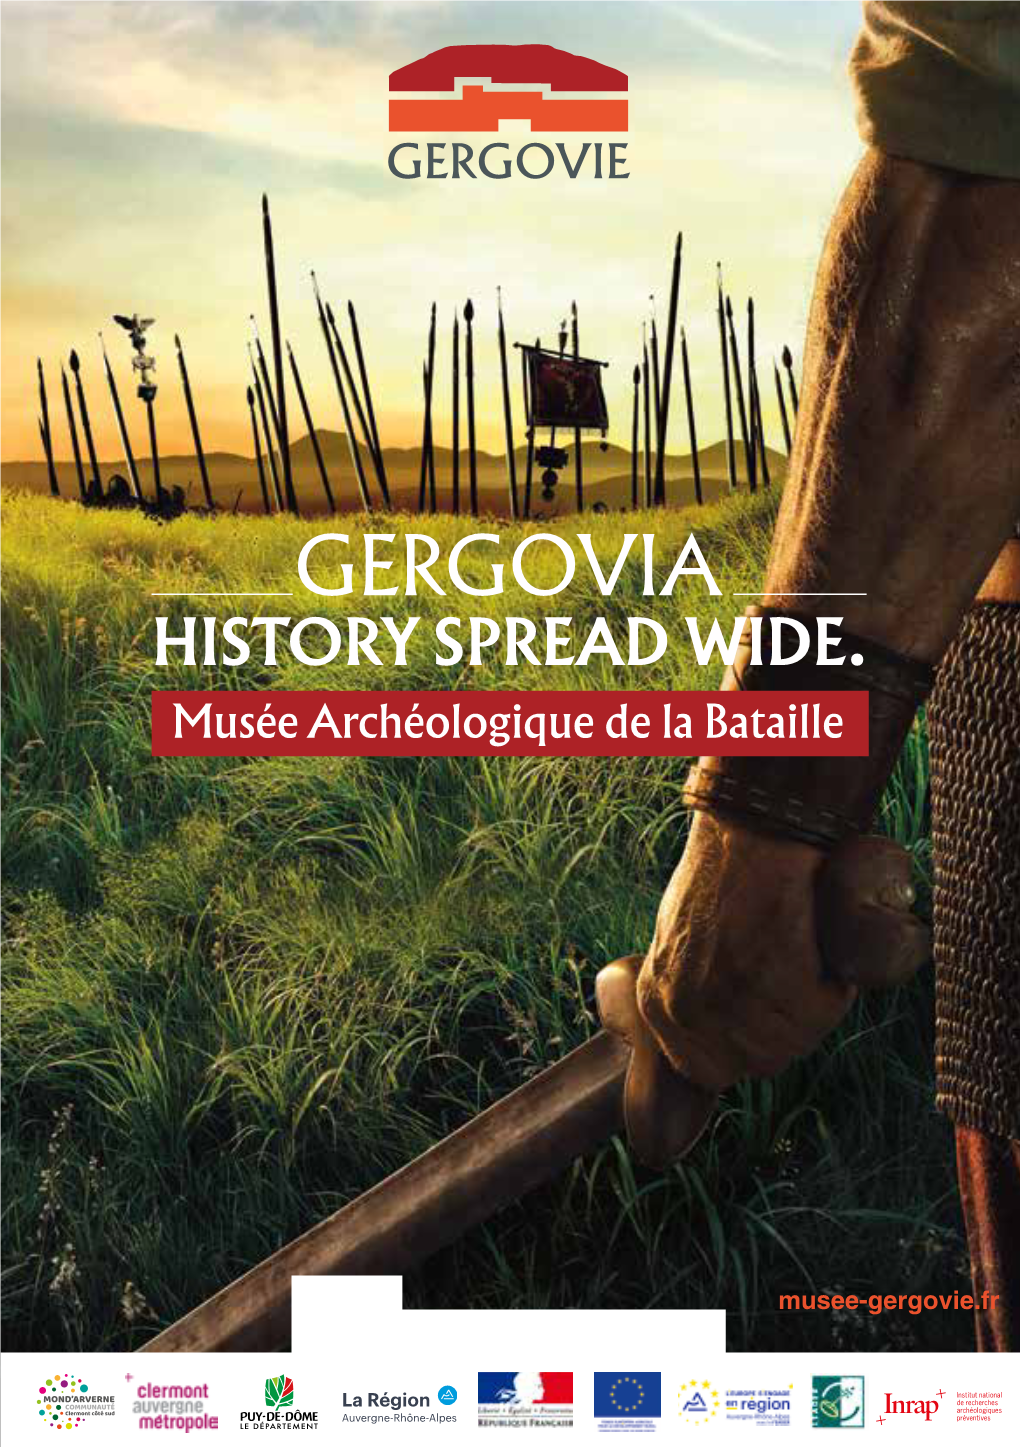 Gergovia History Spread Wide